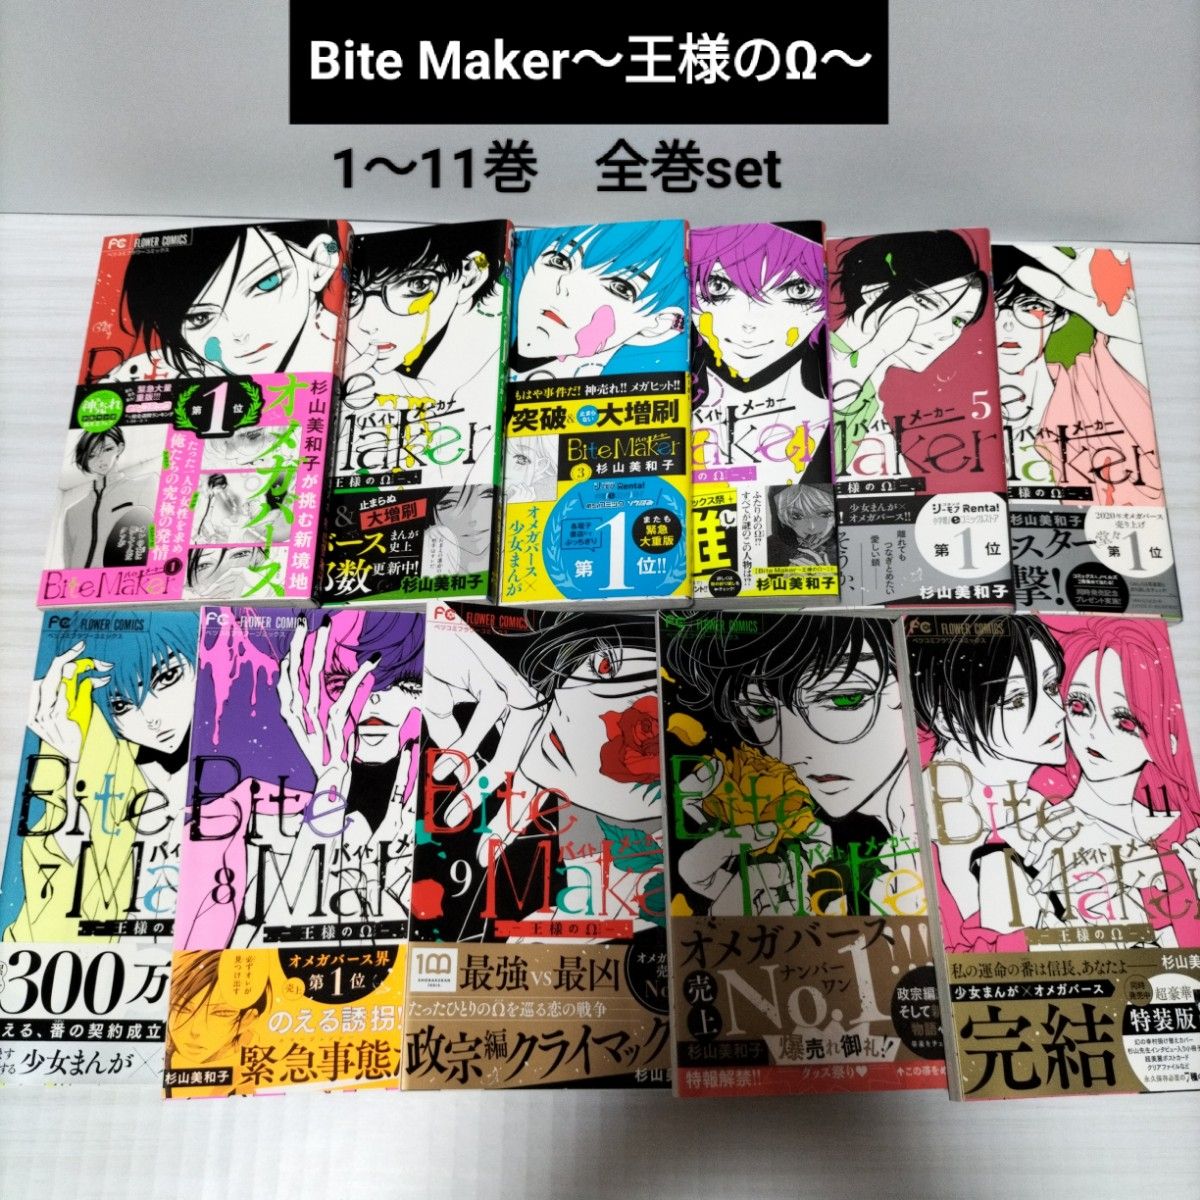 Bite Maker～王様のΩ～1.2.3.4.5.6.7.8.9.10.11巻 全巻set